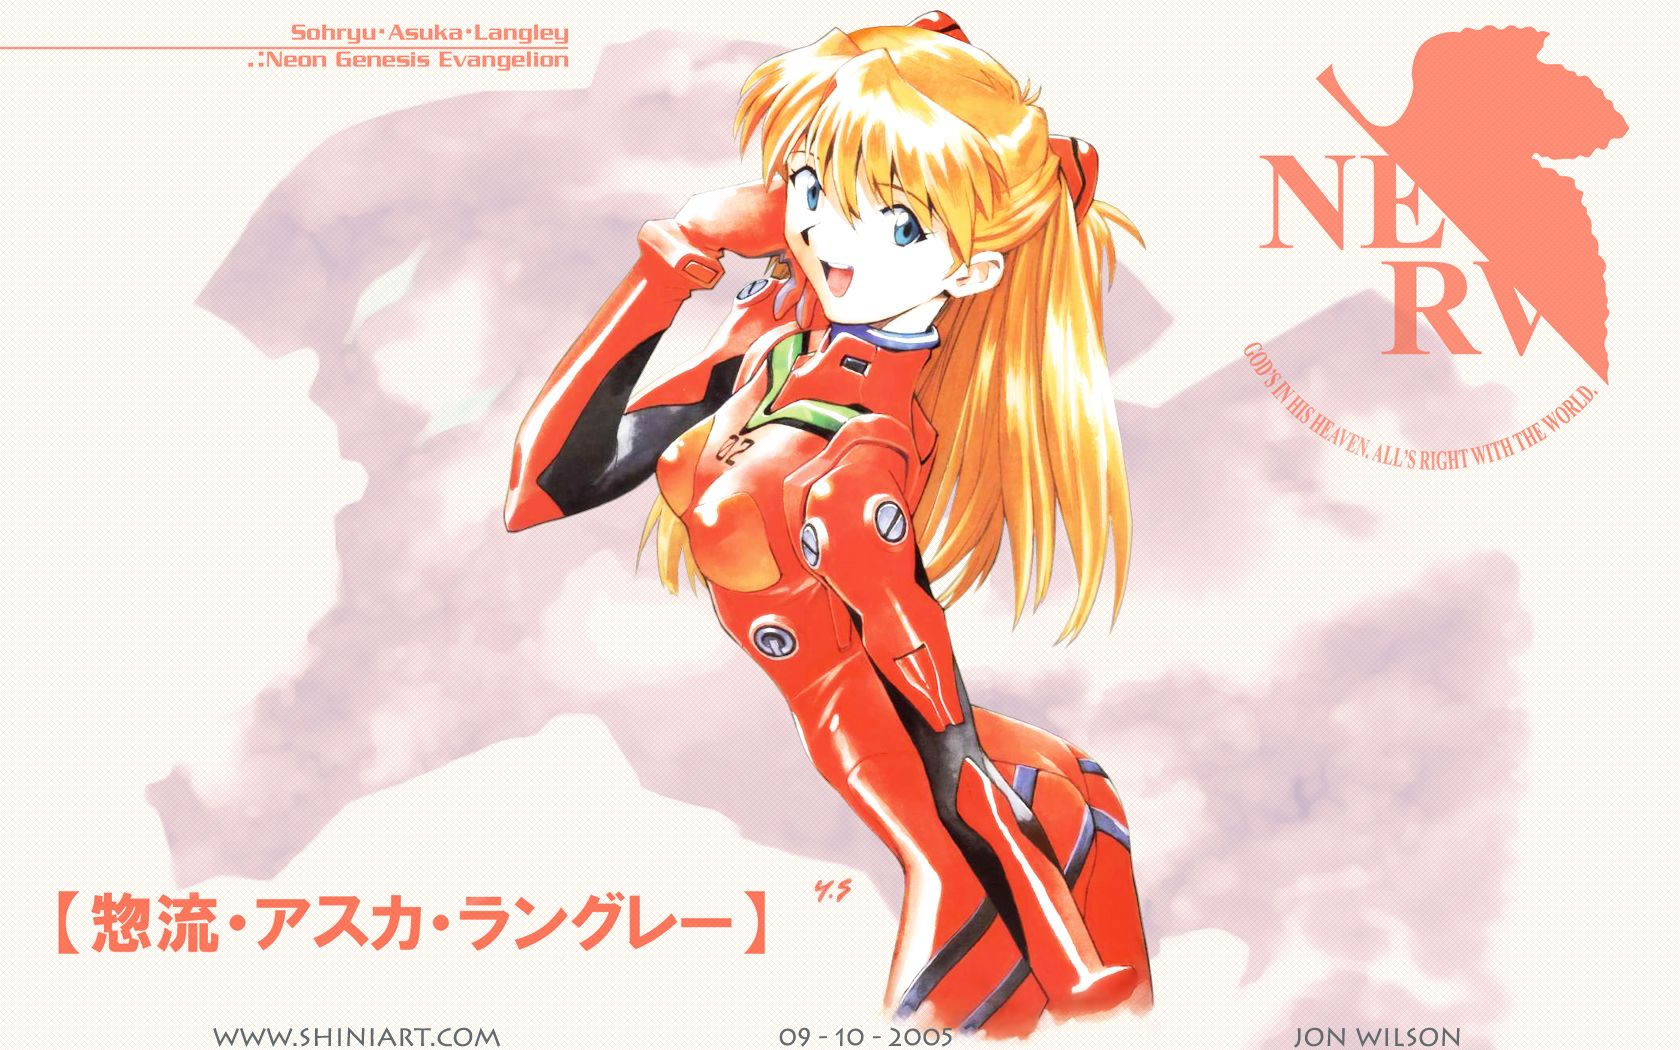 Sohryu Asuka Langley Anime Wallpaper Image Featuring Neon Genesis